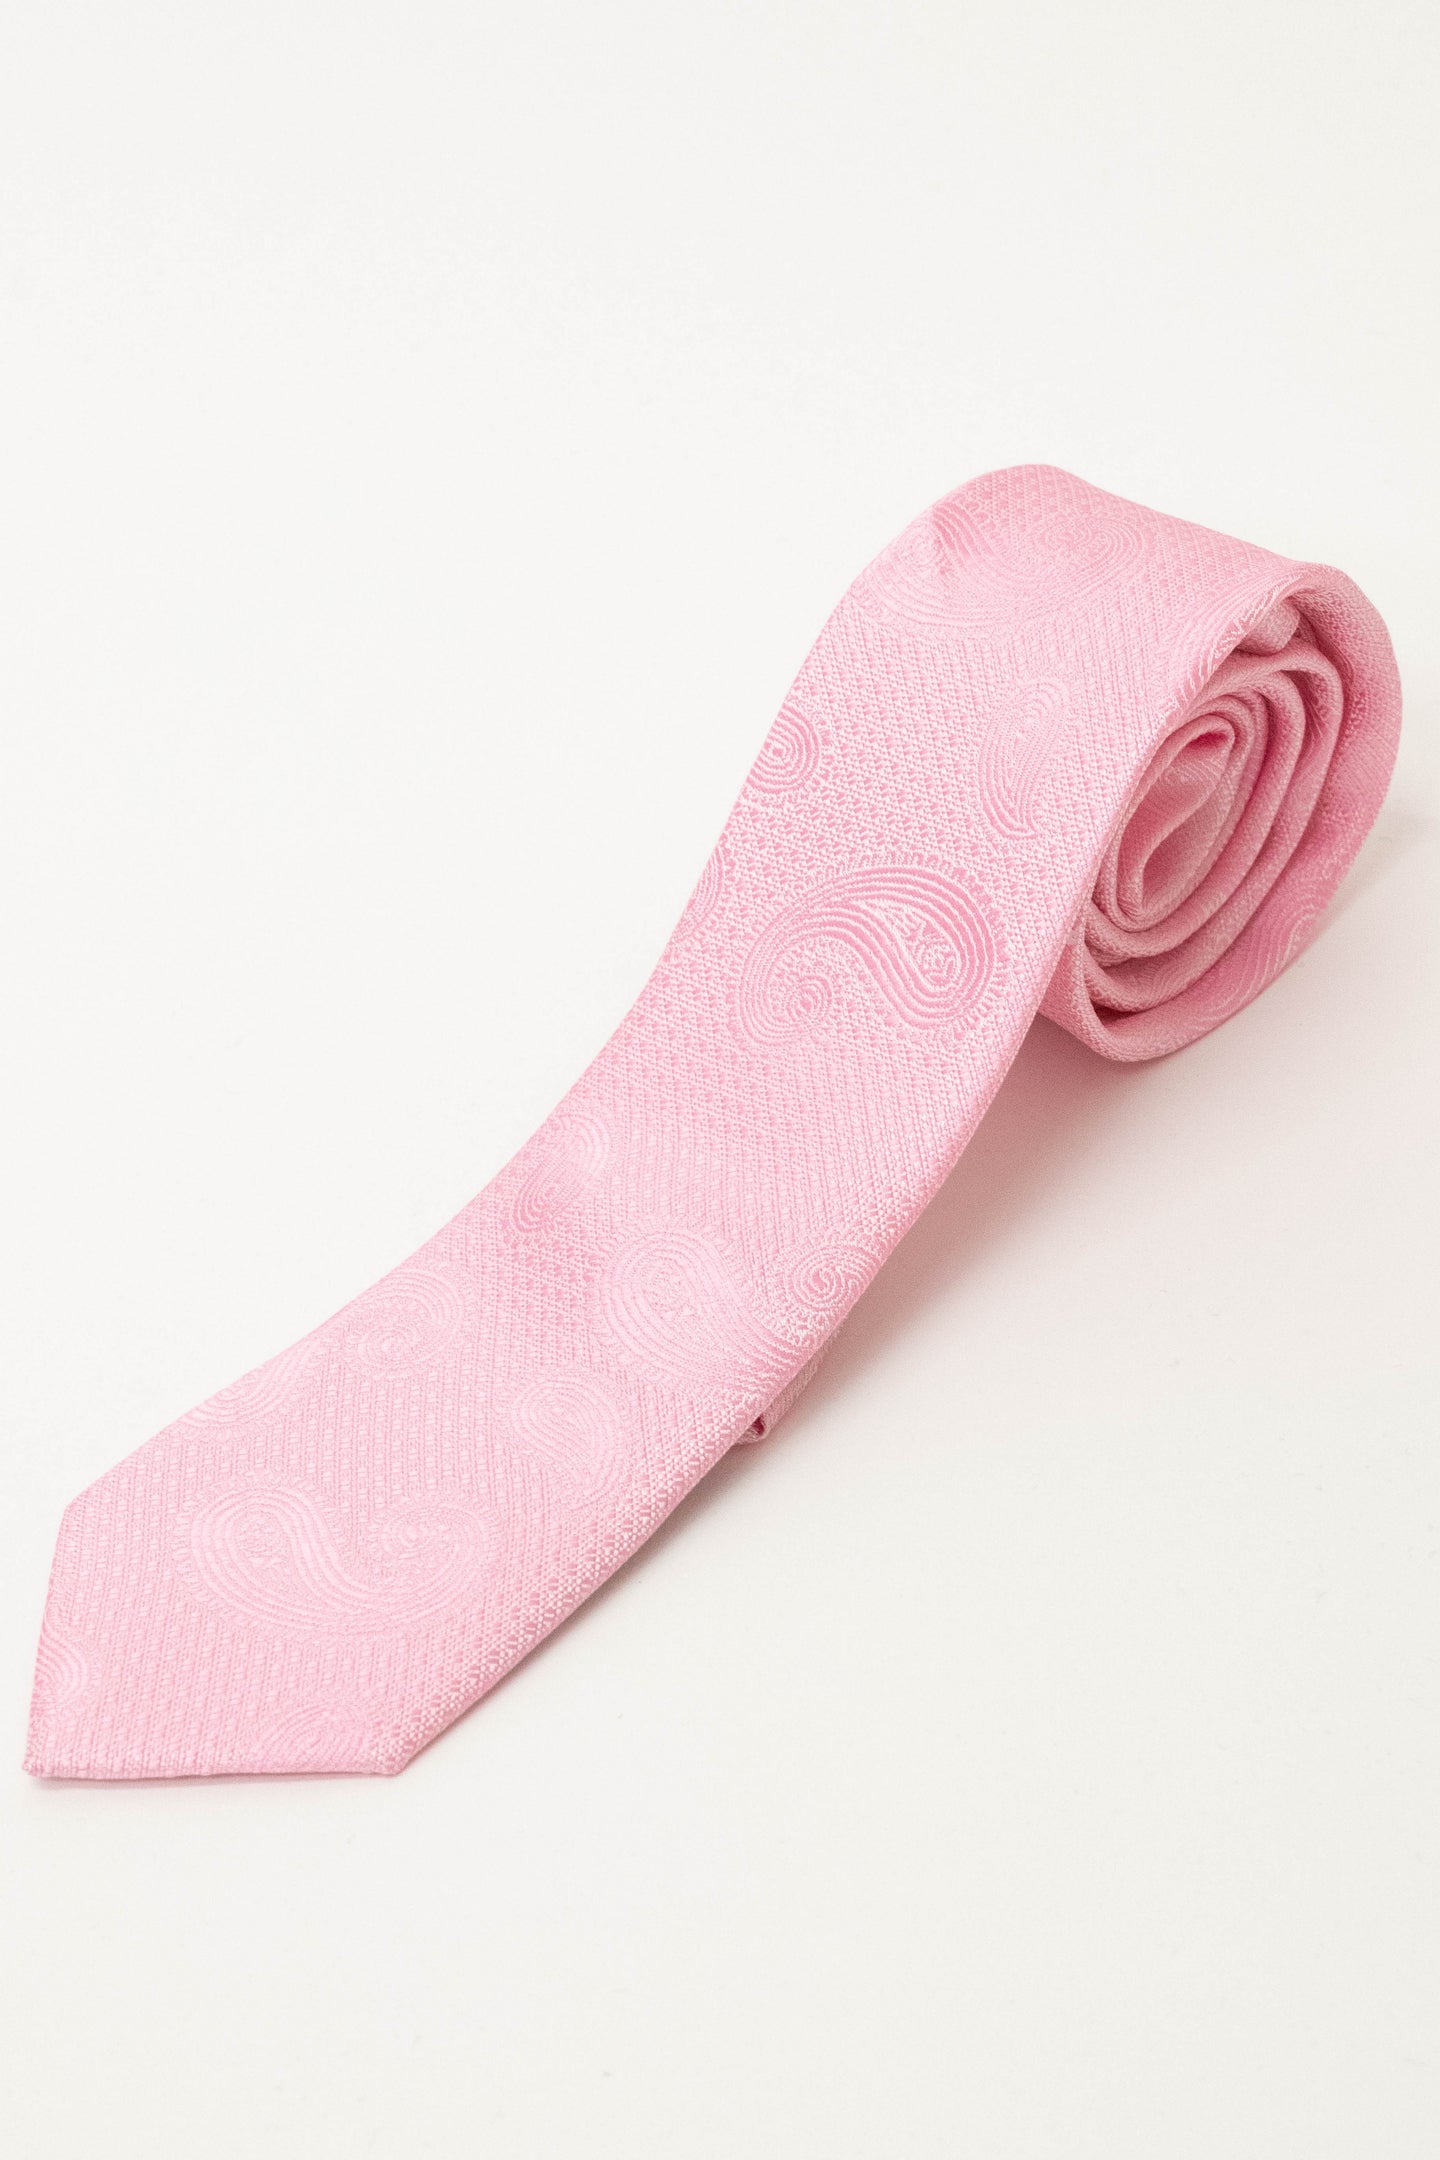 Knightsbridge Neckwear Pink Paisley Tie Pink